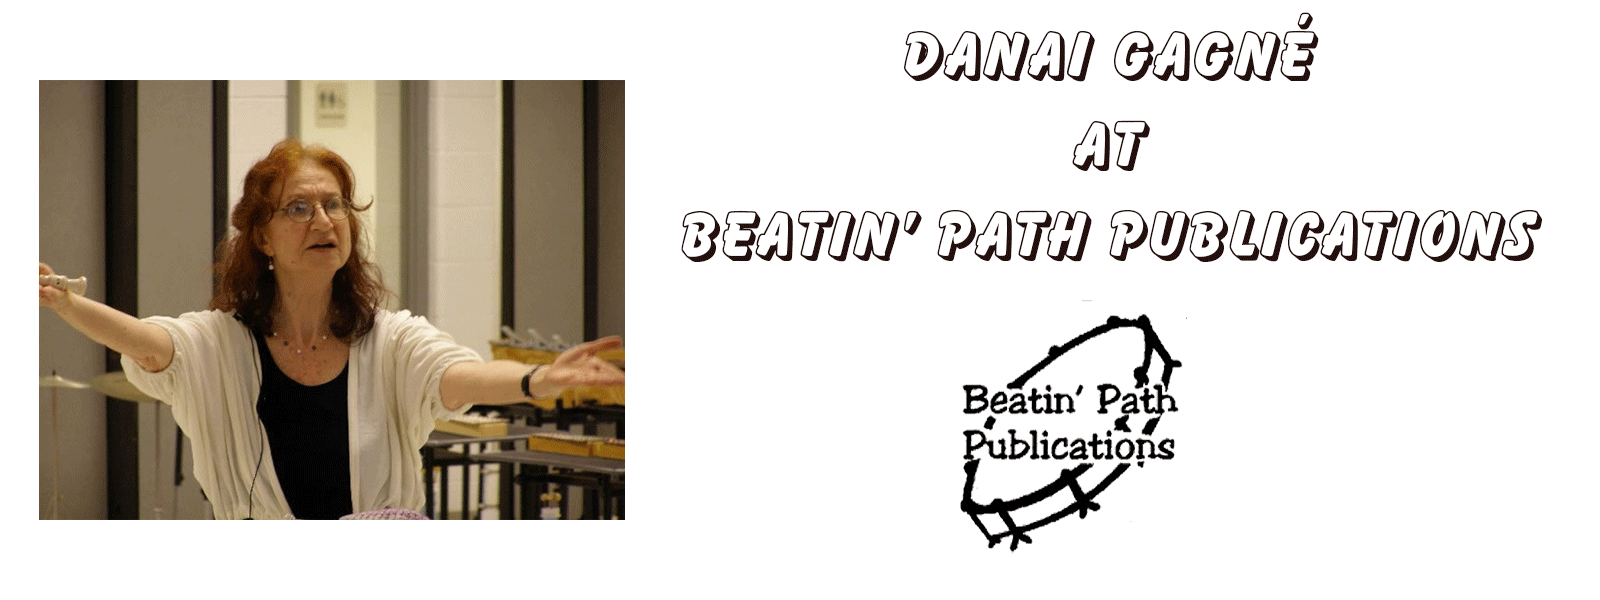 Danai Gagné at Beatin' Path Publications